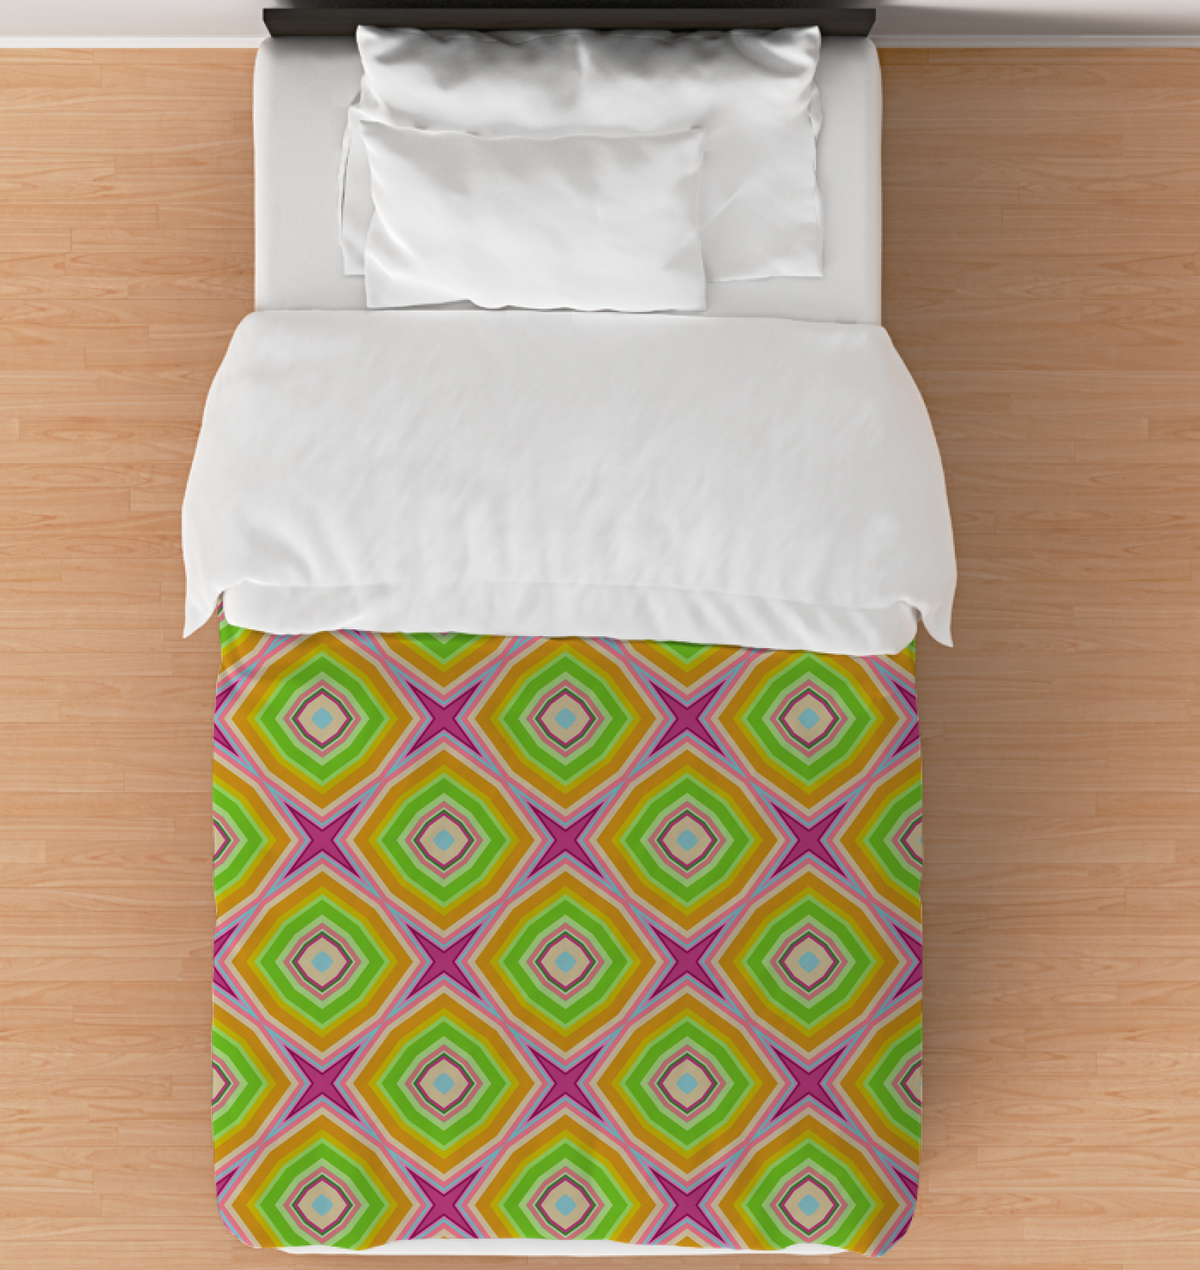 Artistic Stripes Comforter with modern design on bed